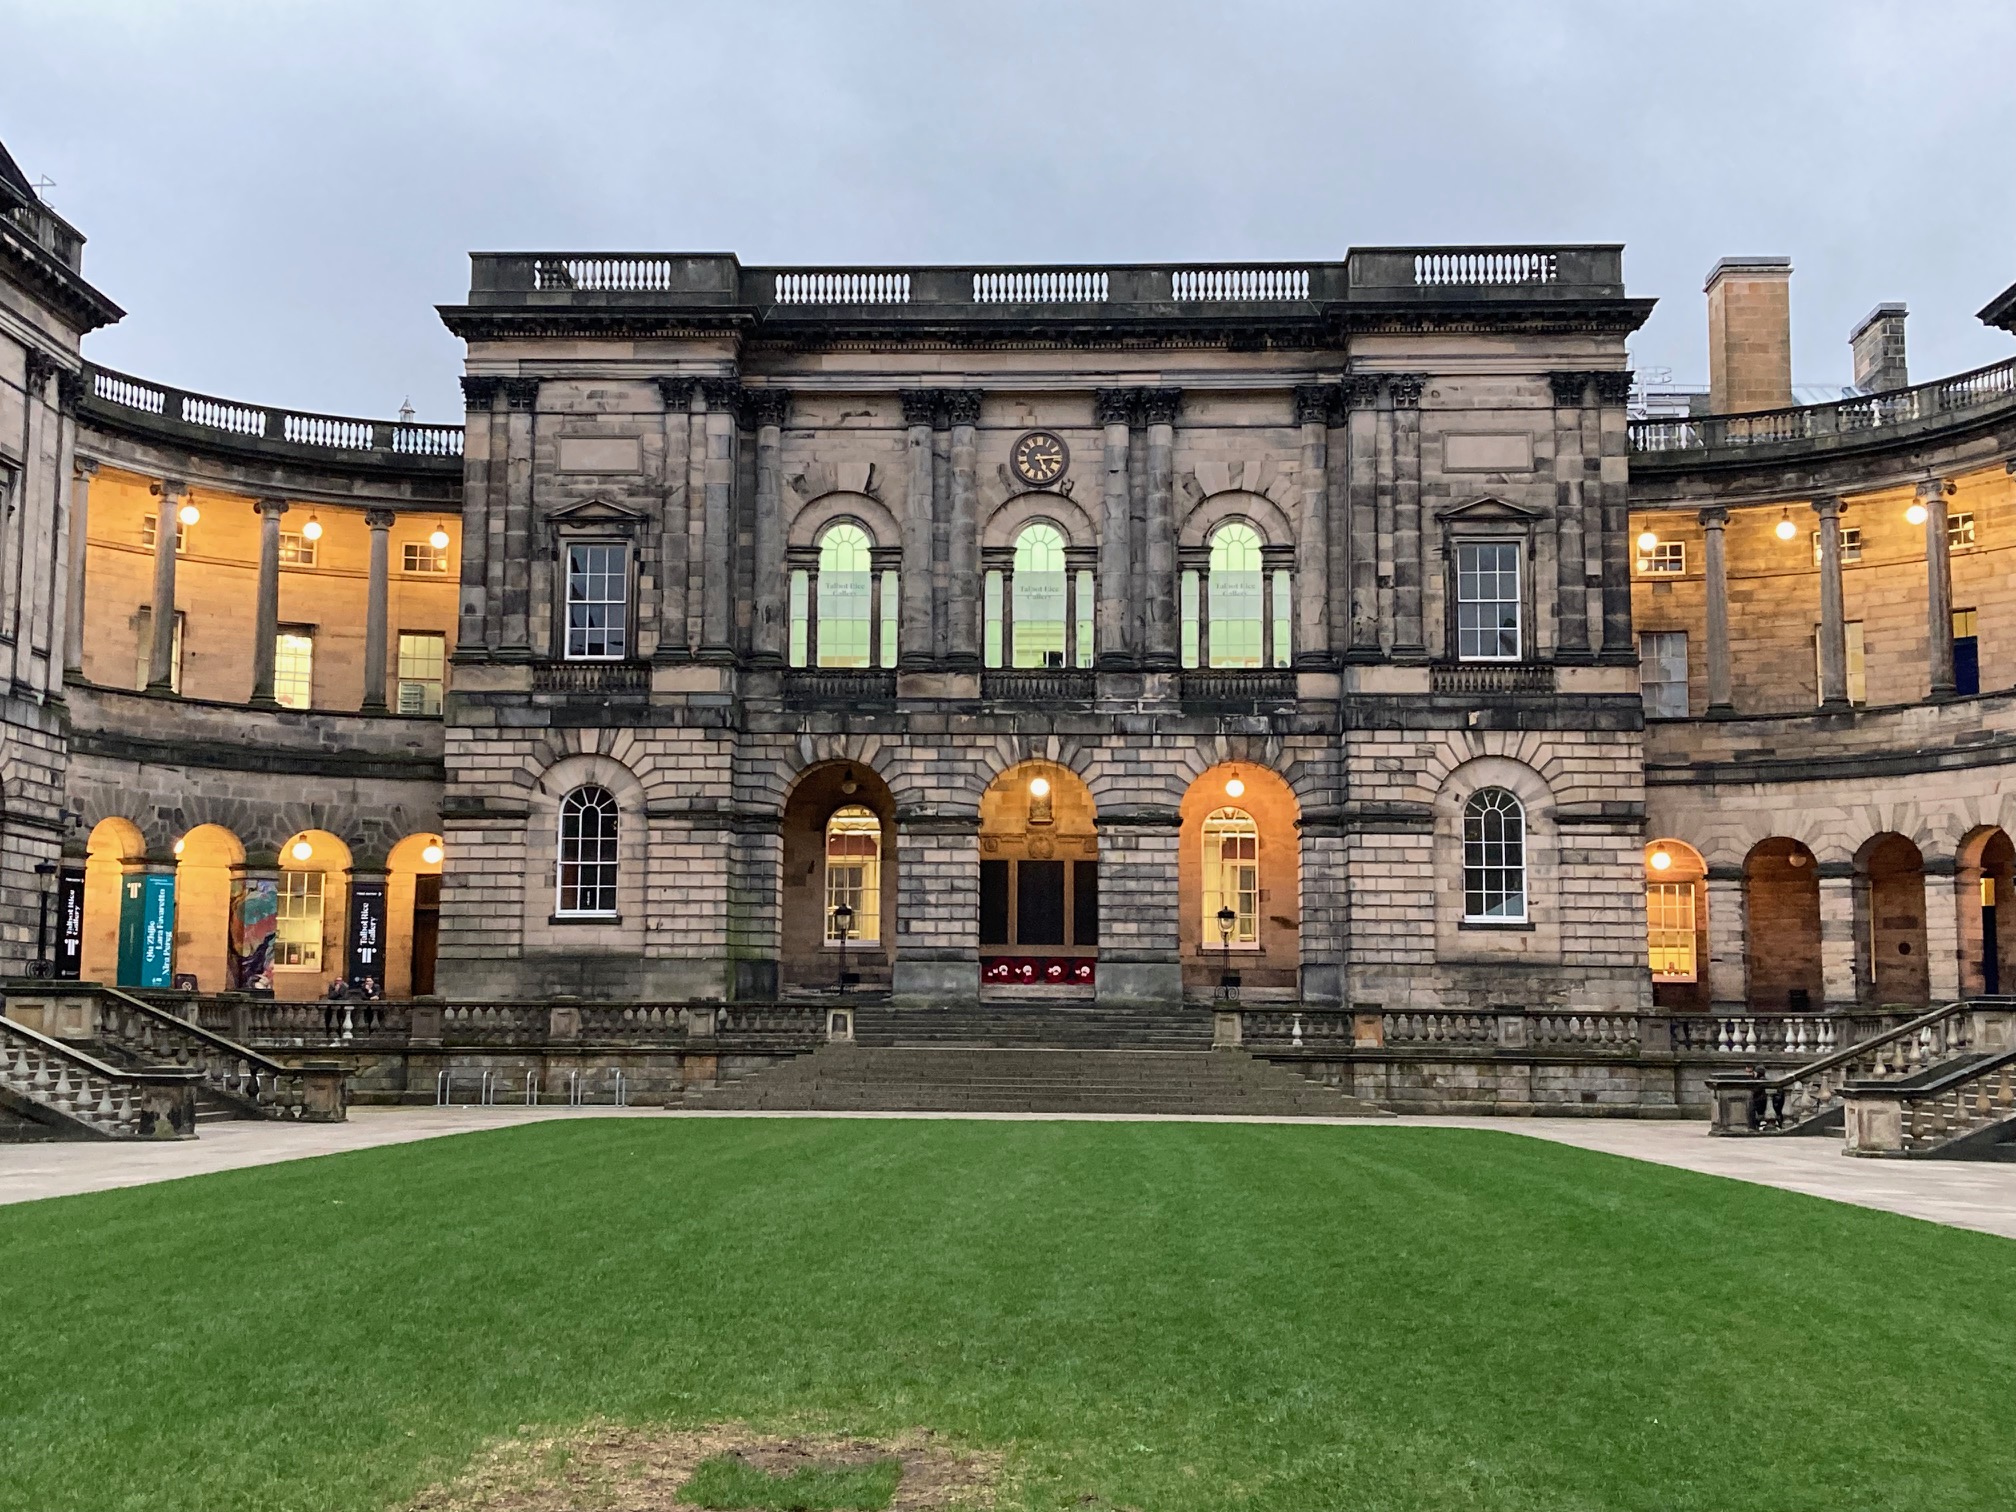 Playfair Library in Edinburgh